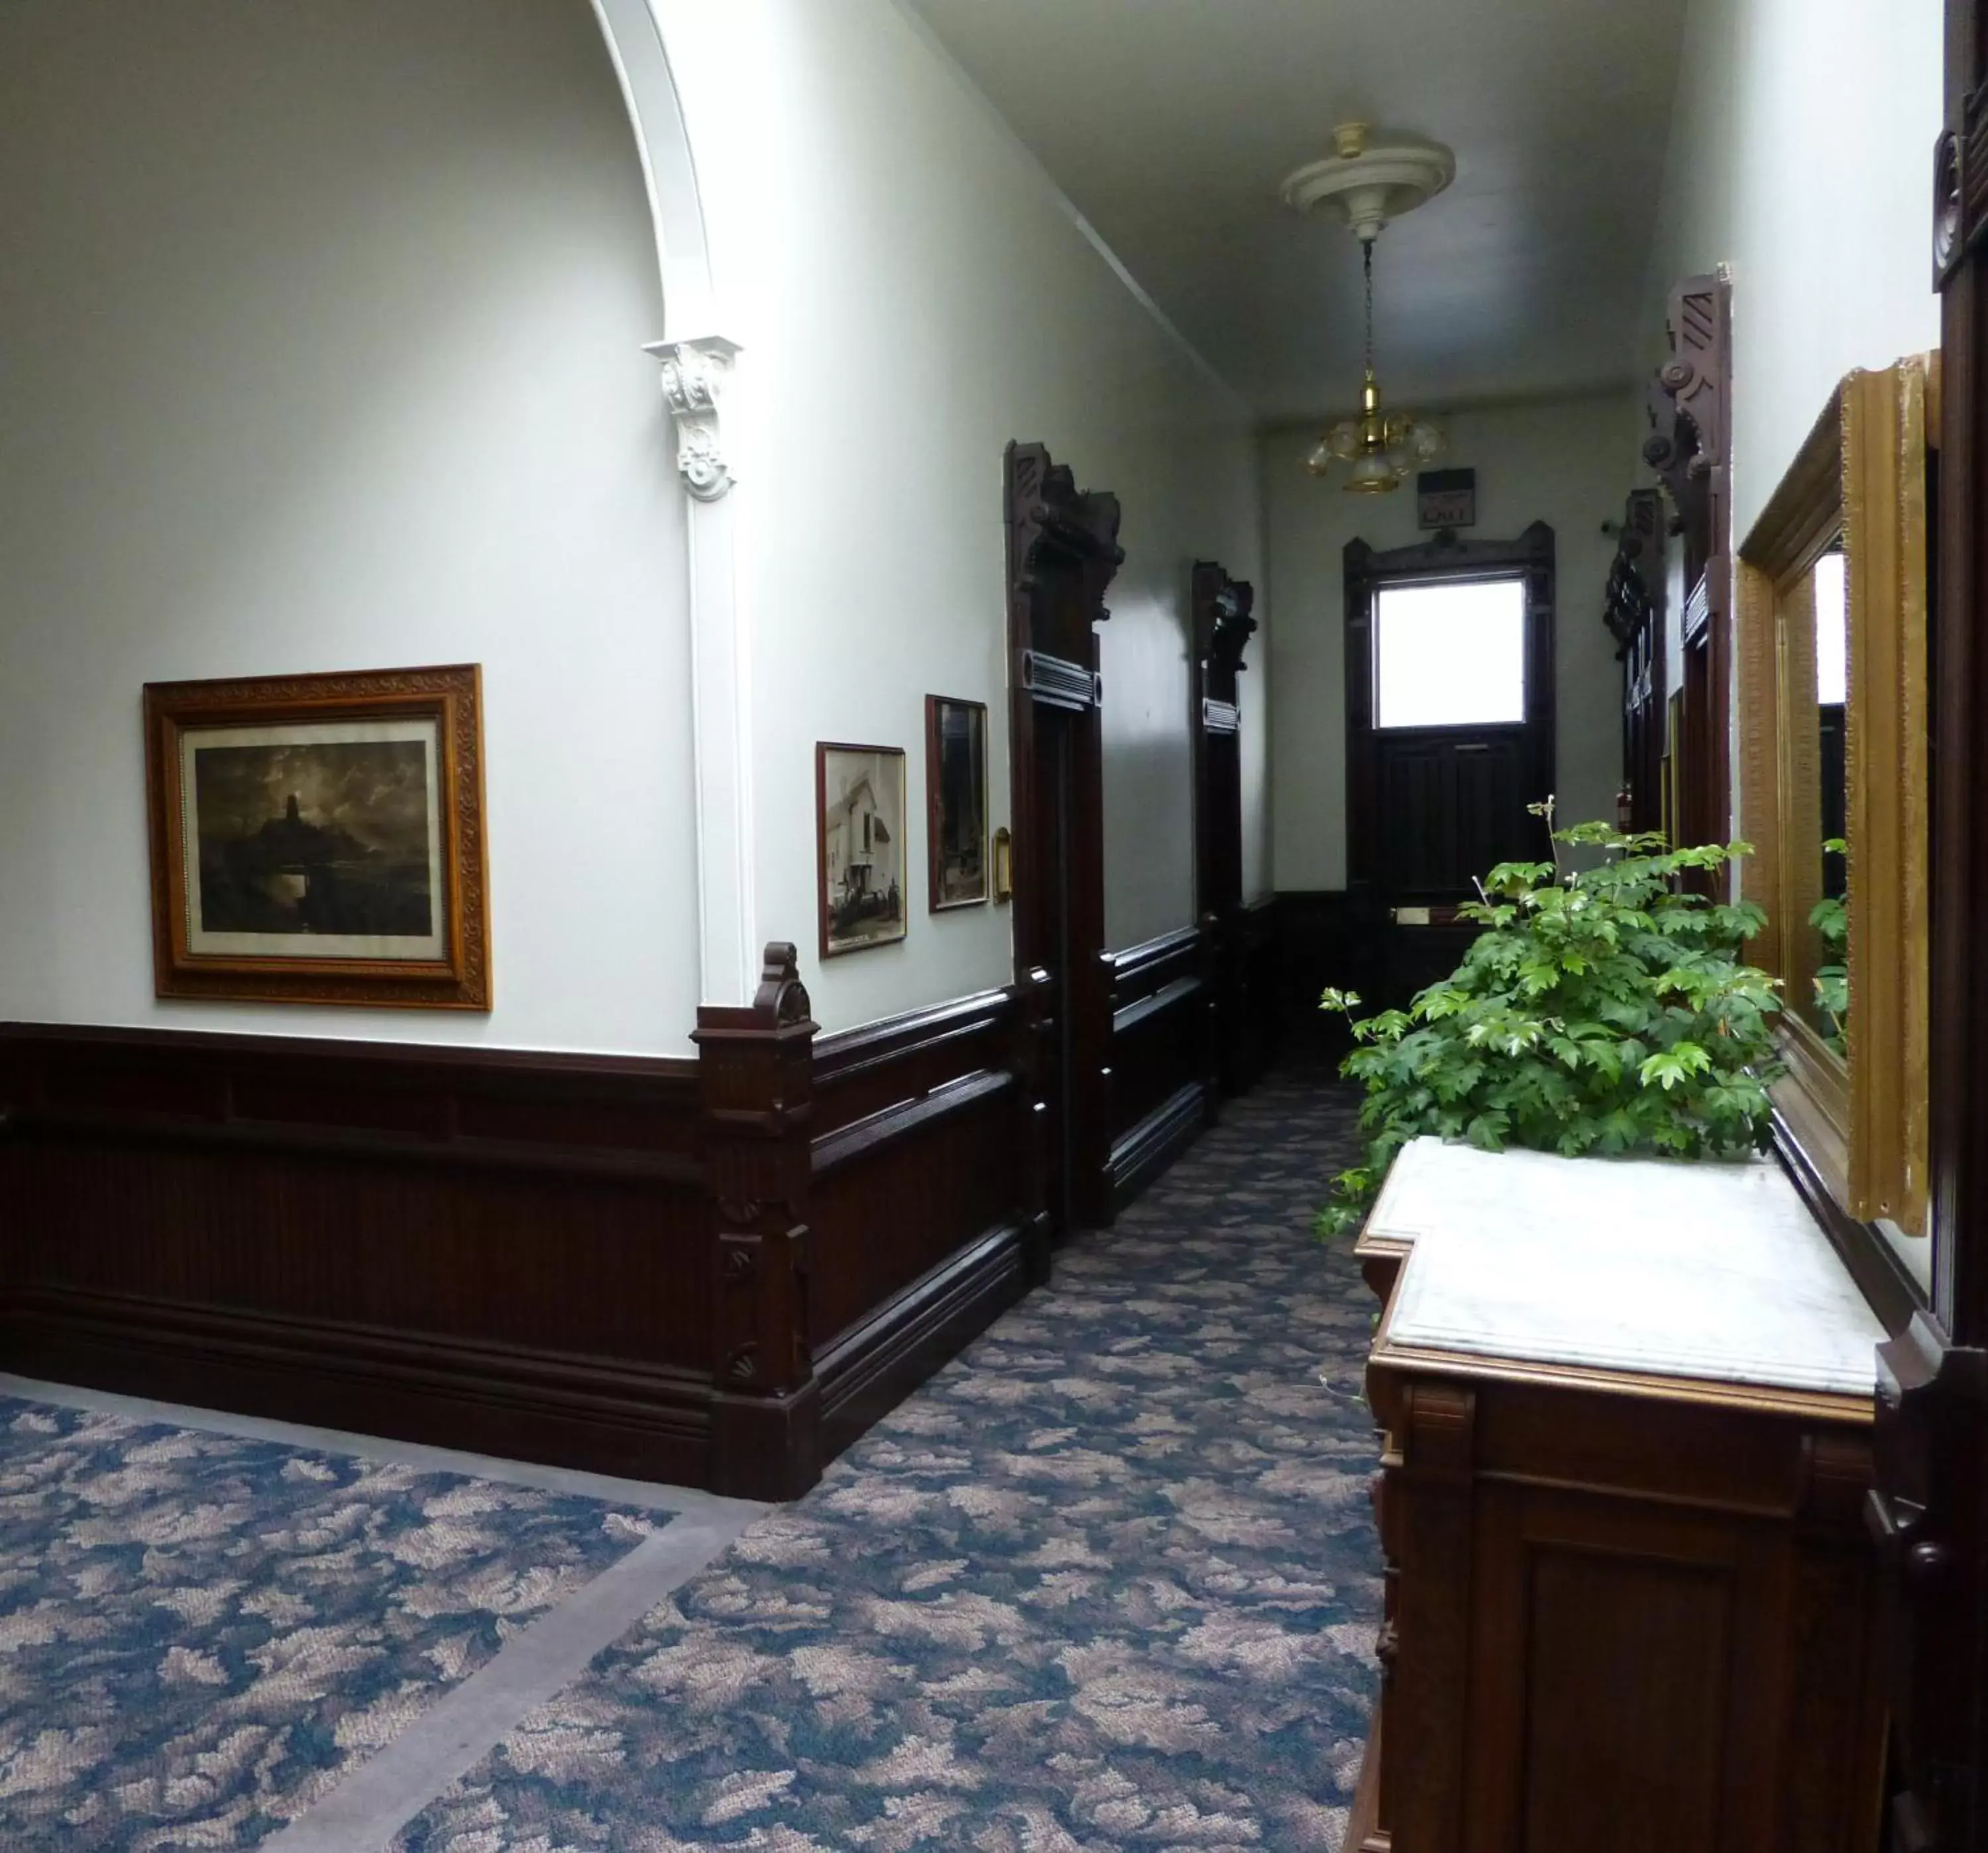 Lobby or reception in Victorian Inn